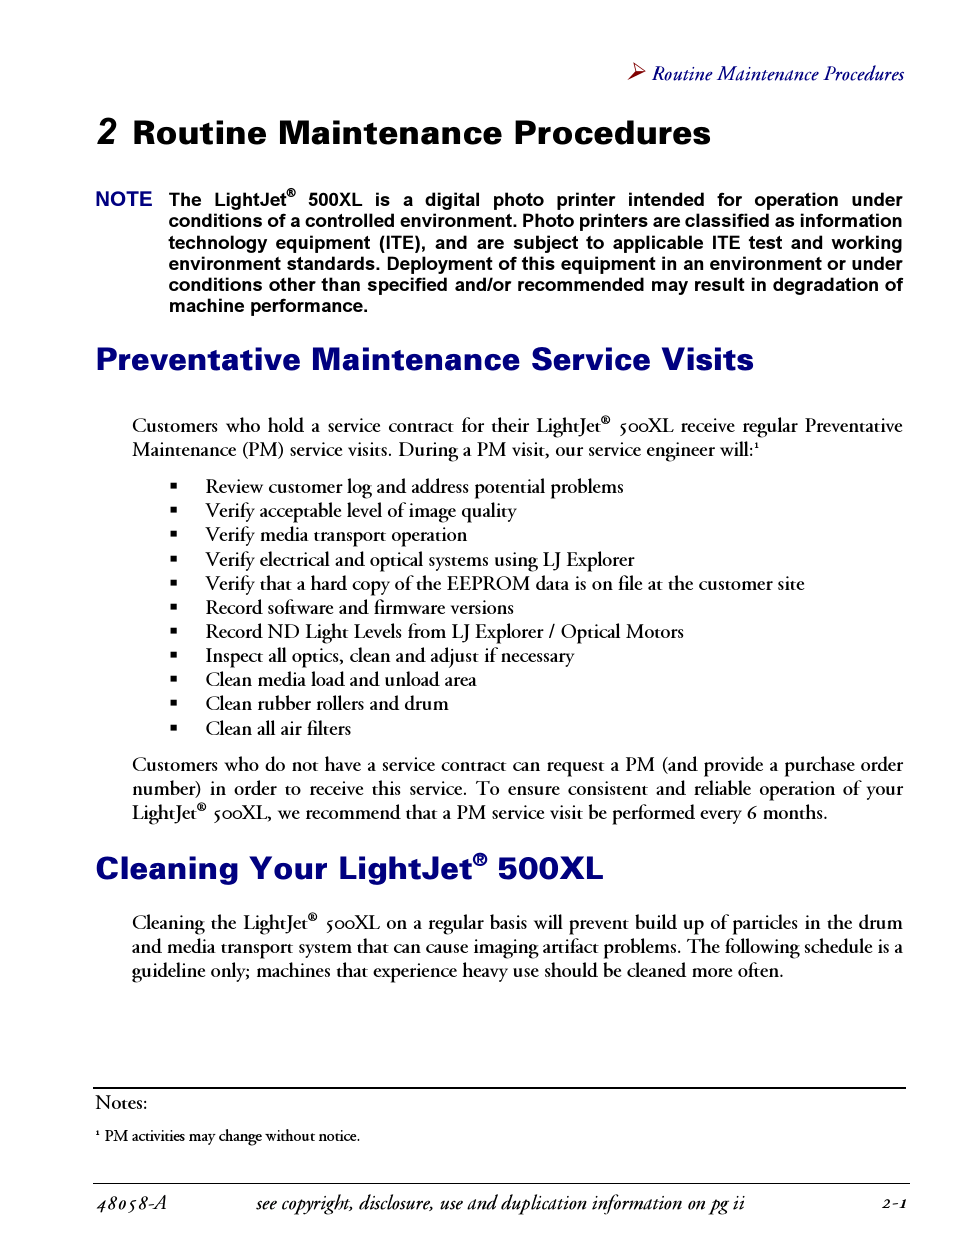 Oce North America Logo - 2 routine maintenance procedures -1, 500xl -1, Routine maintenance ...